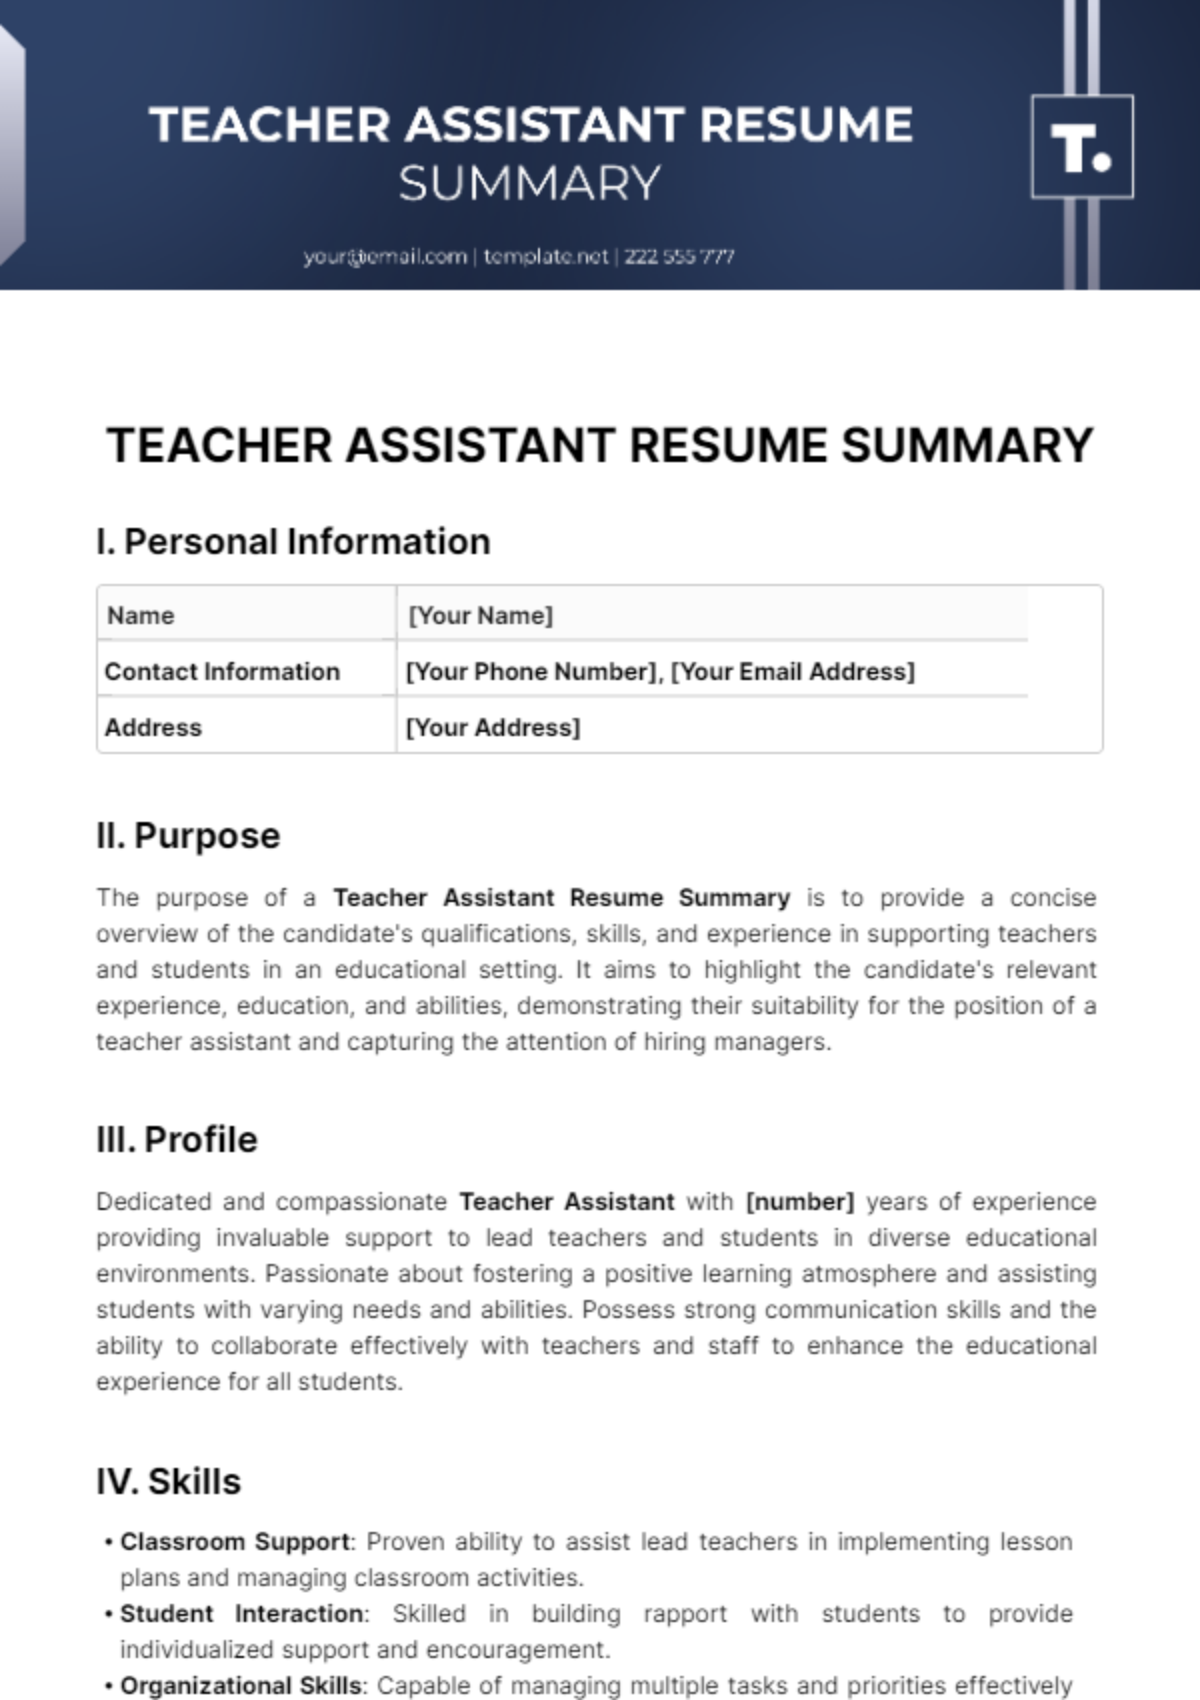 Teacher Assistant Resume Summary Template